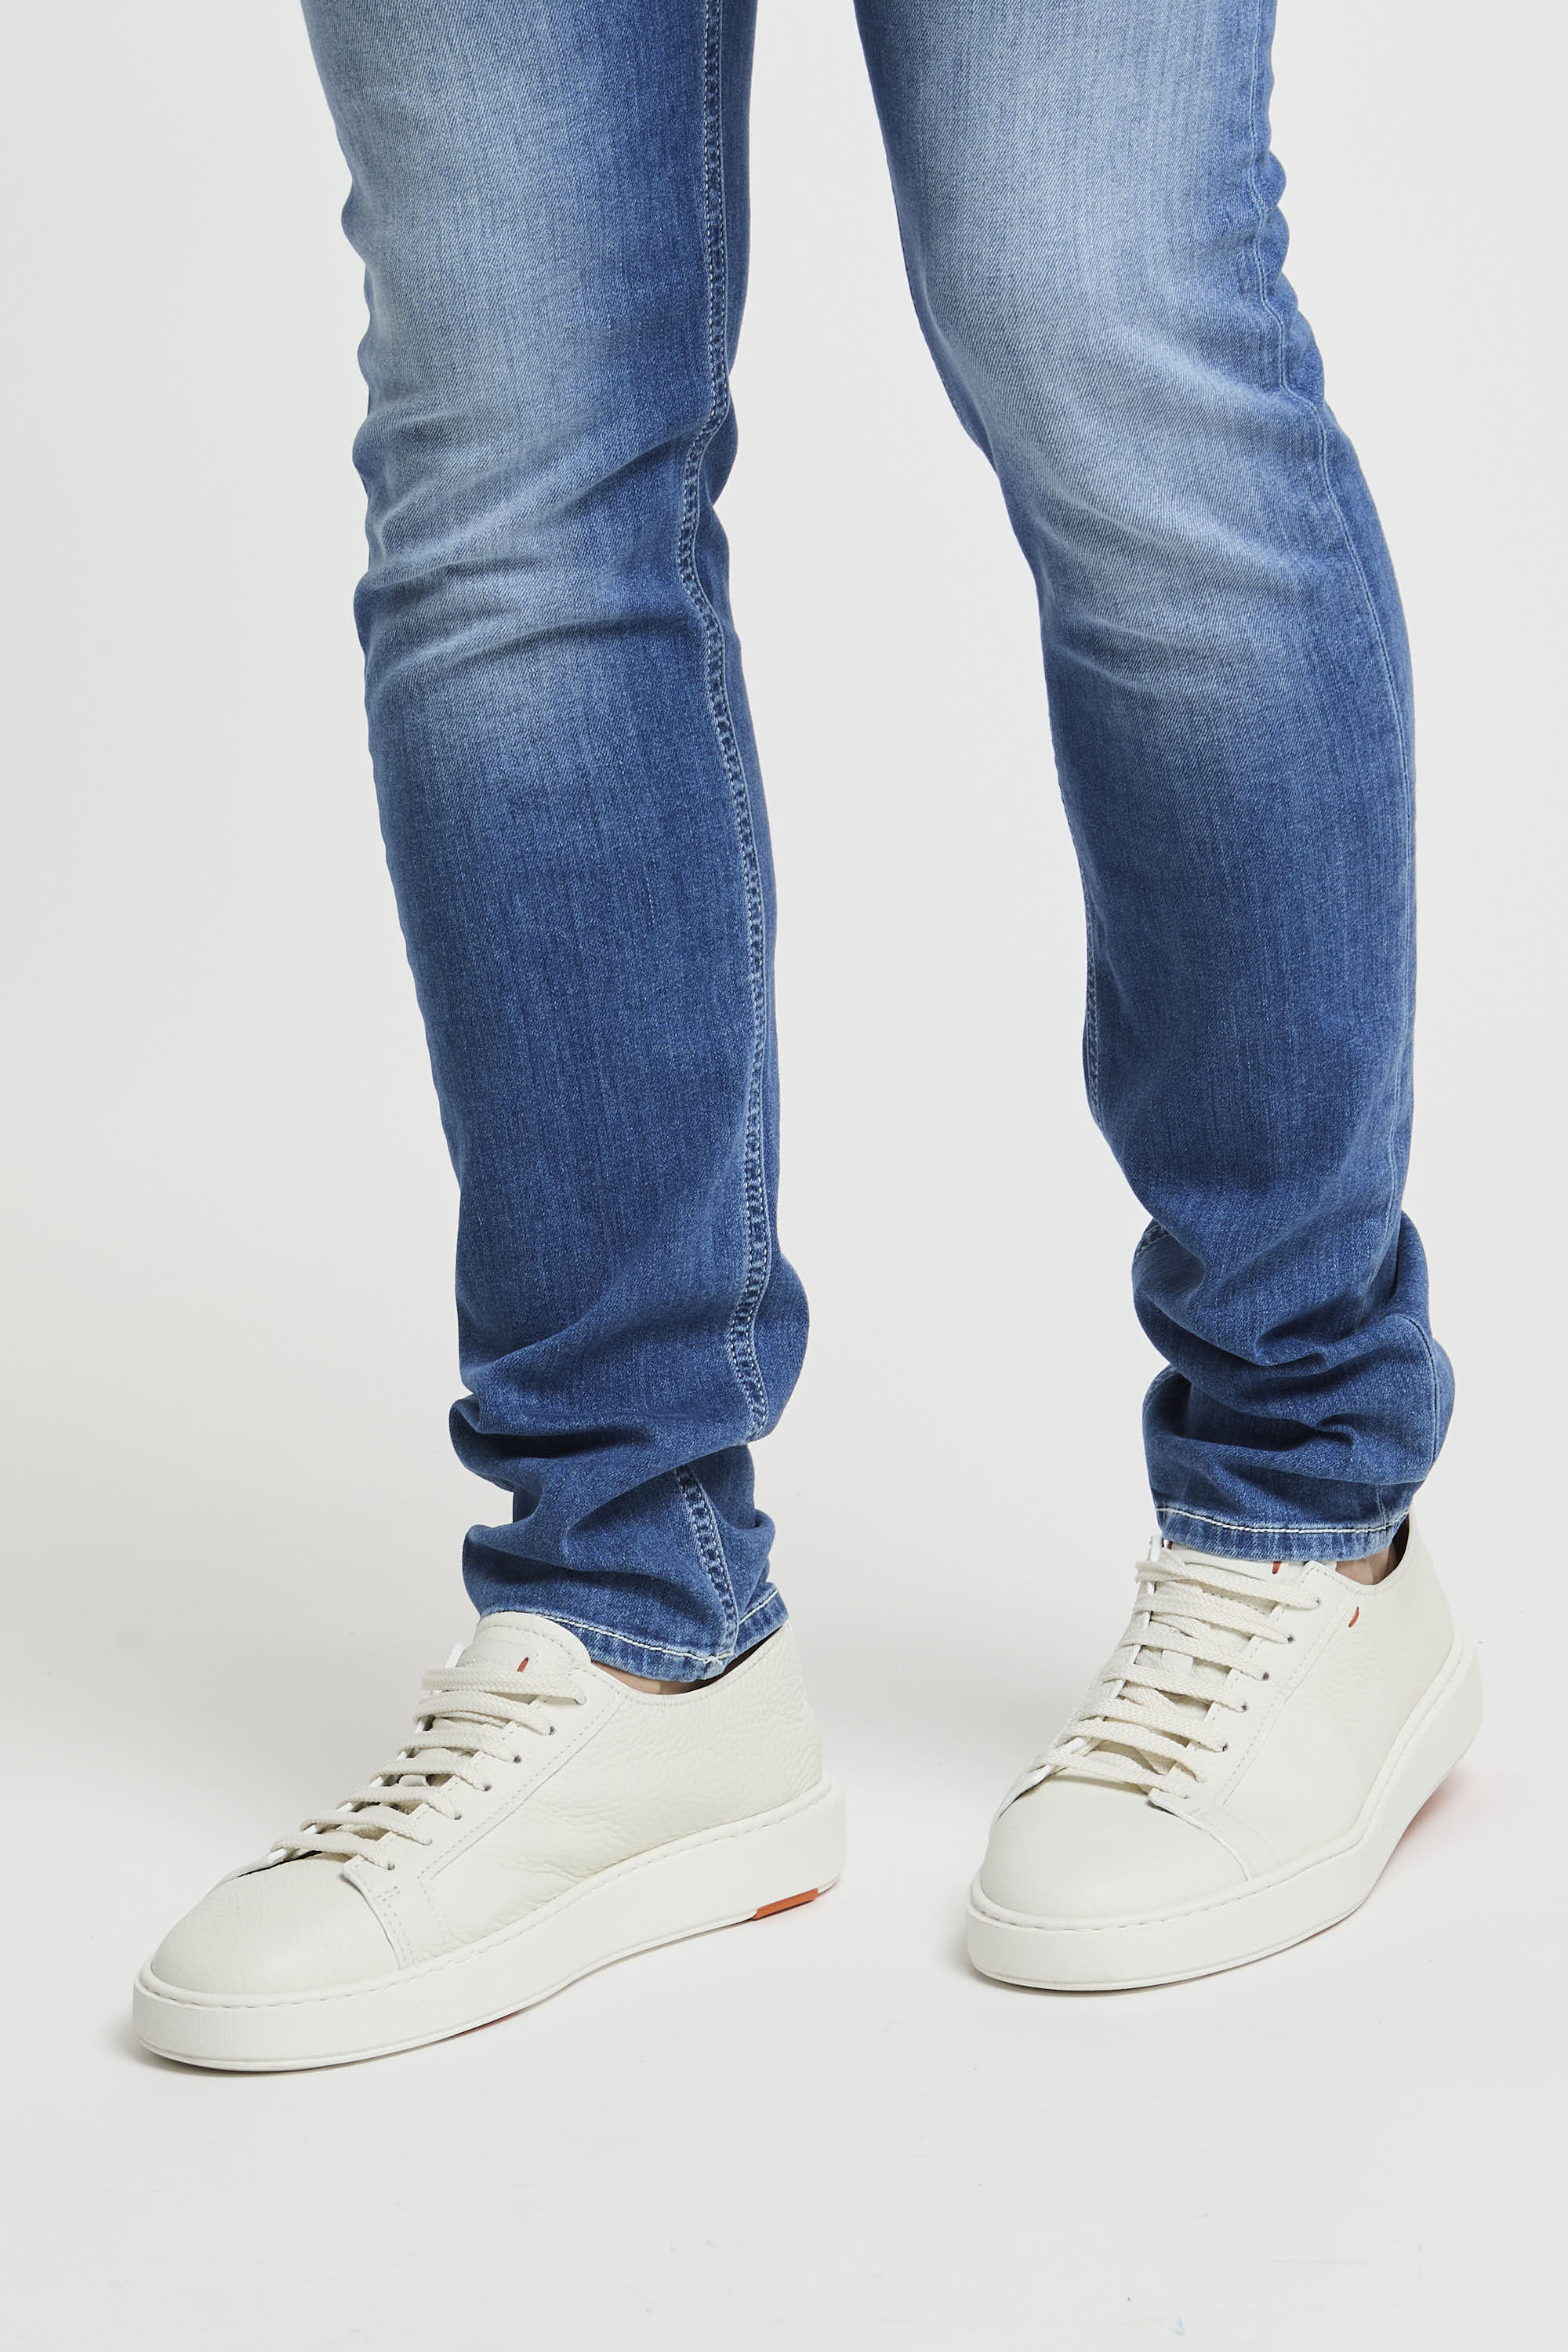 Handpicked Jeans Orvieto Cotton/Elastomultiester Denim-7